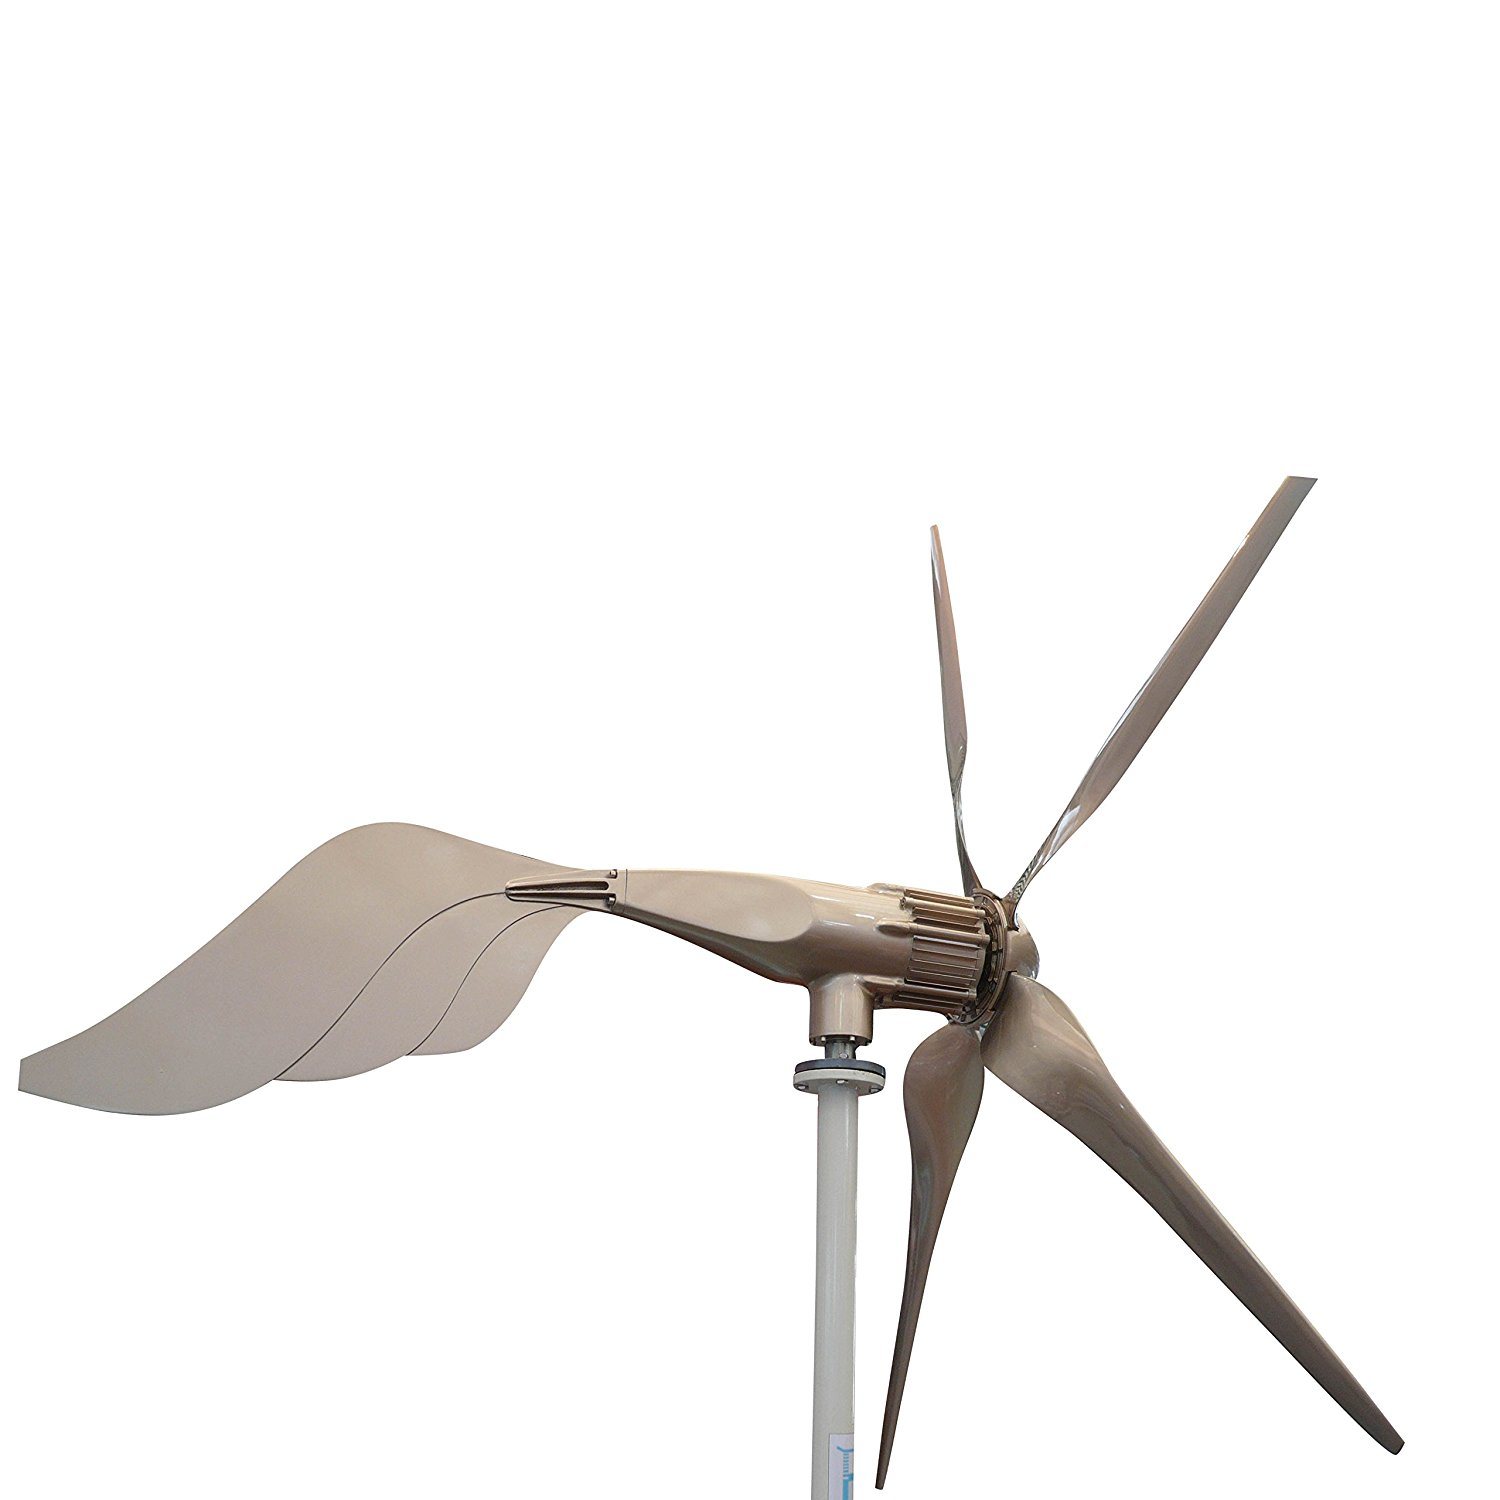 China Home Wind Power Kit 1.5kw Wind Turbine on Grid or ...